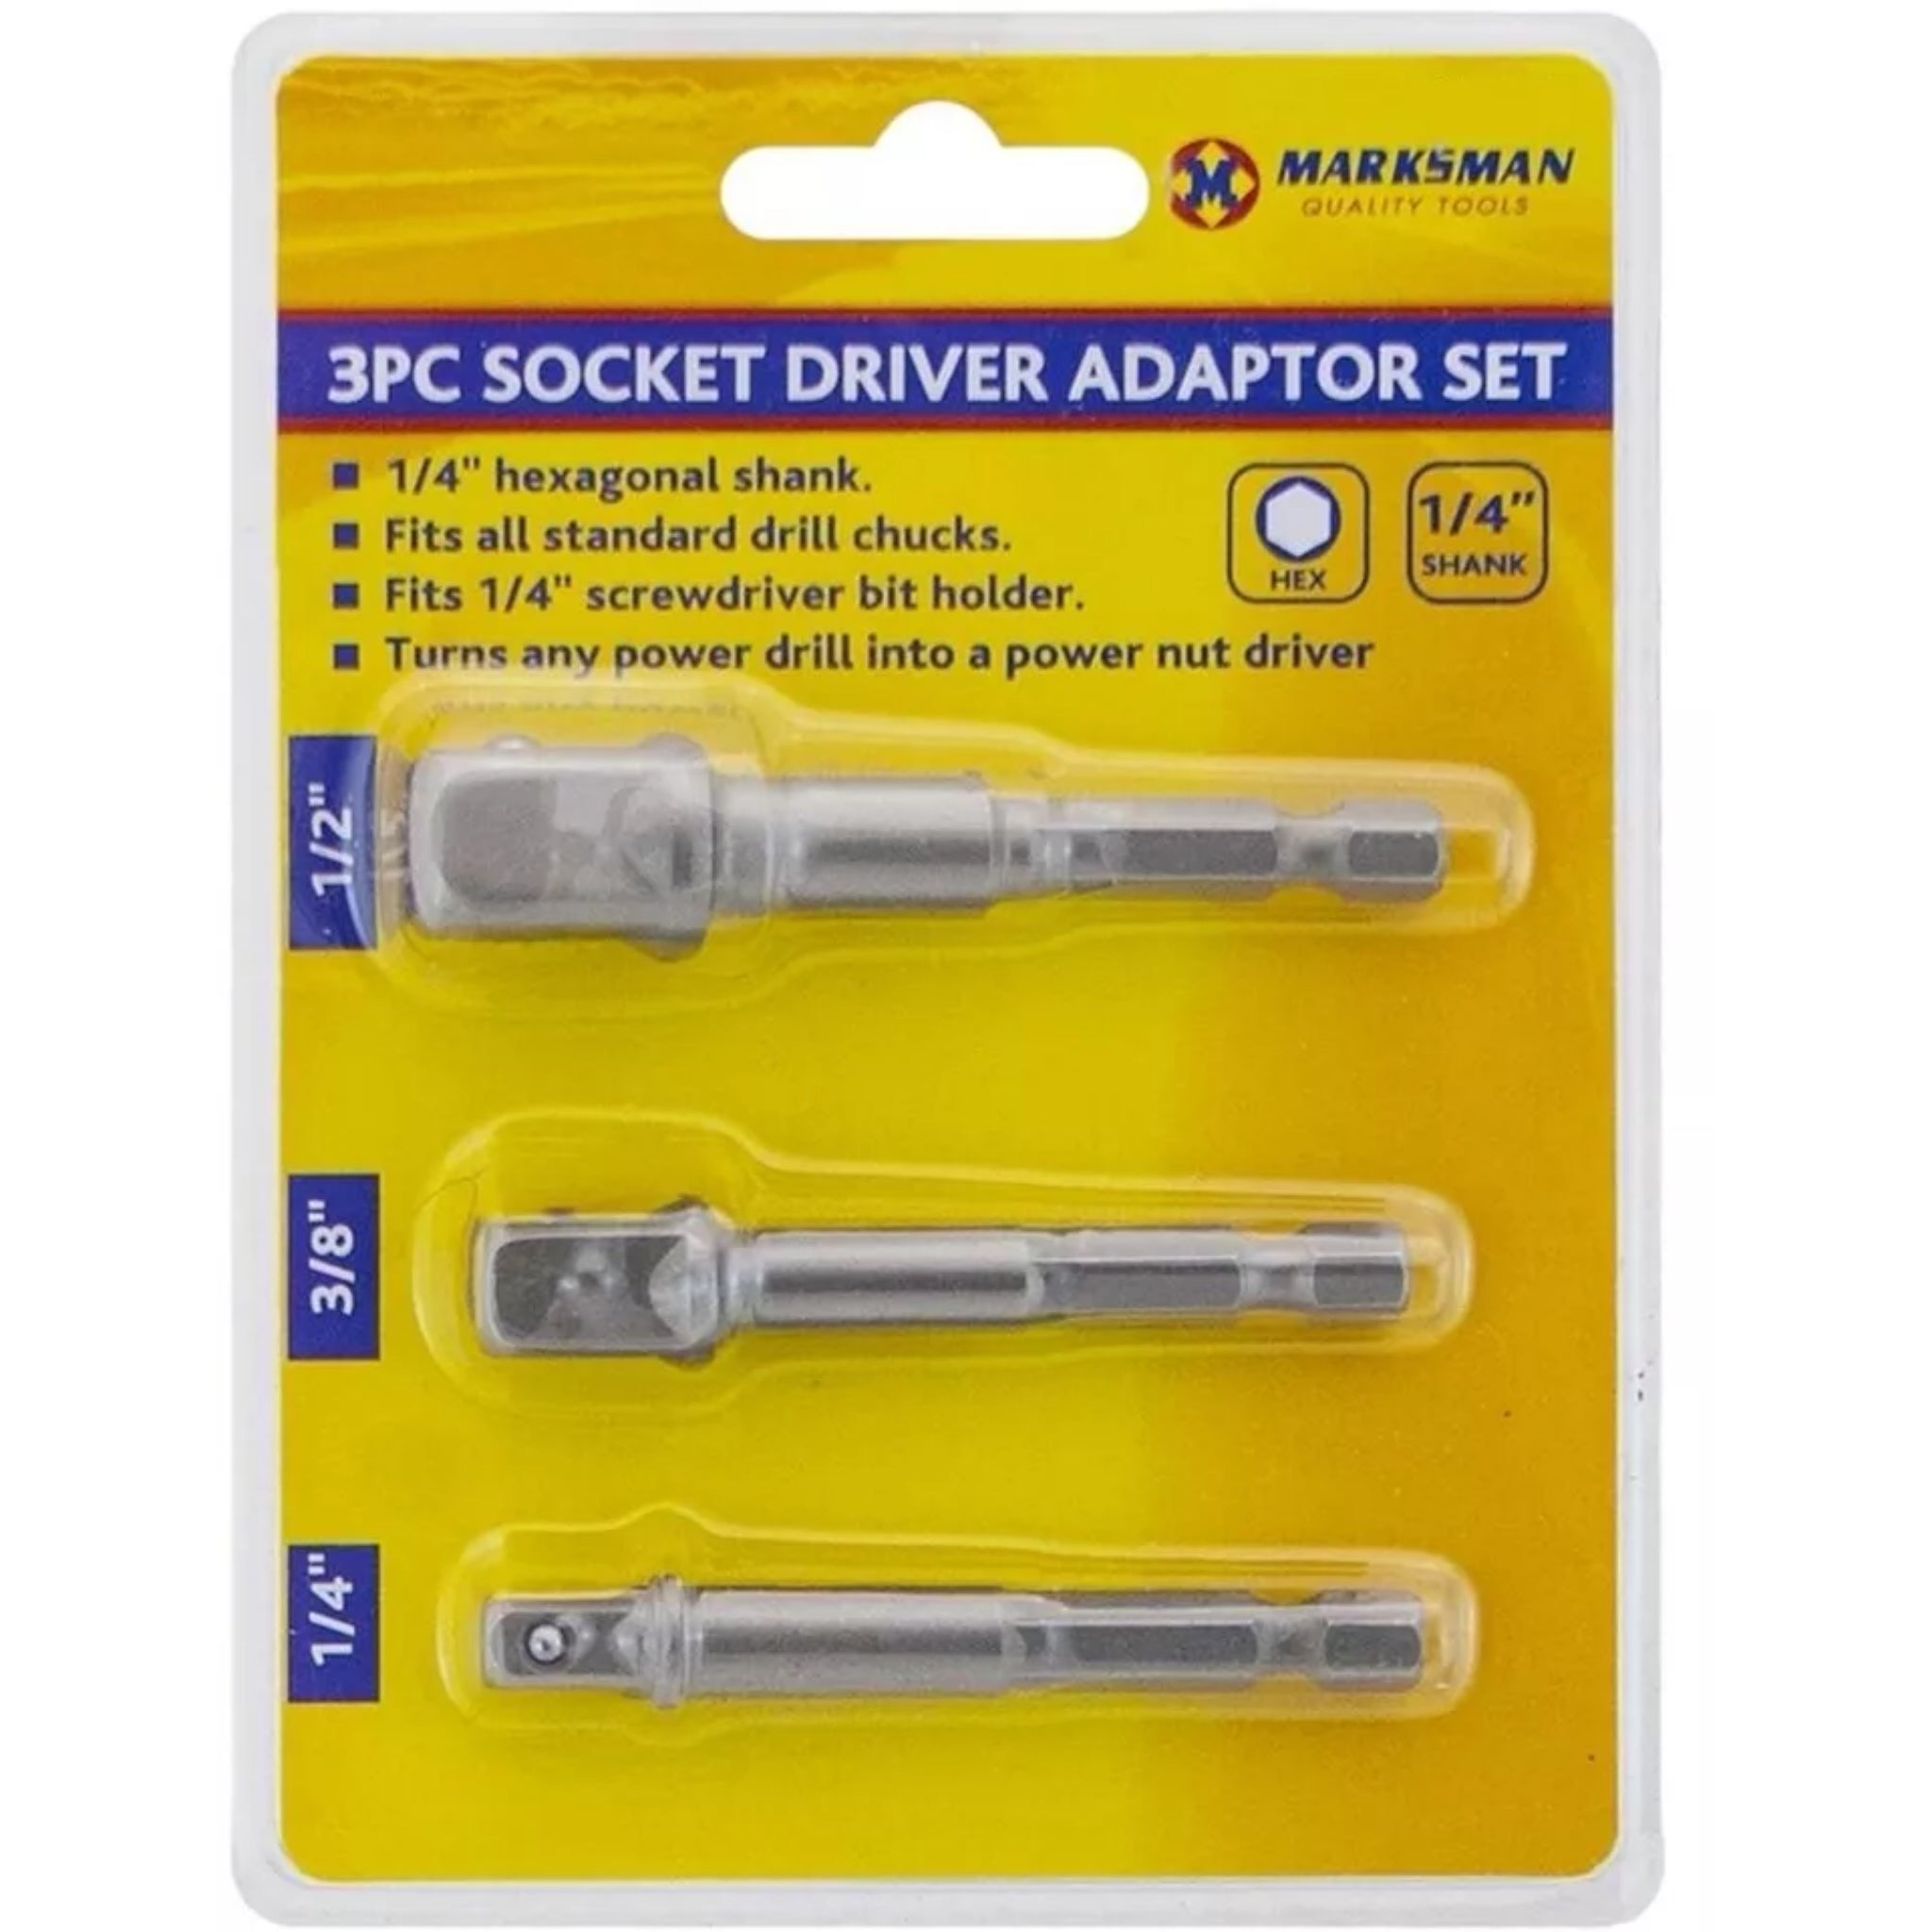 Beclen Harp 3Pcs Socket Adapter Set 3pc 1/4" 3/8" 1/2" Impact Drill Bits Driver Adapter